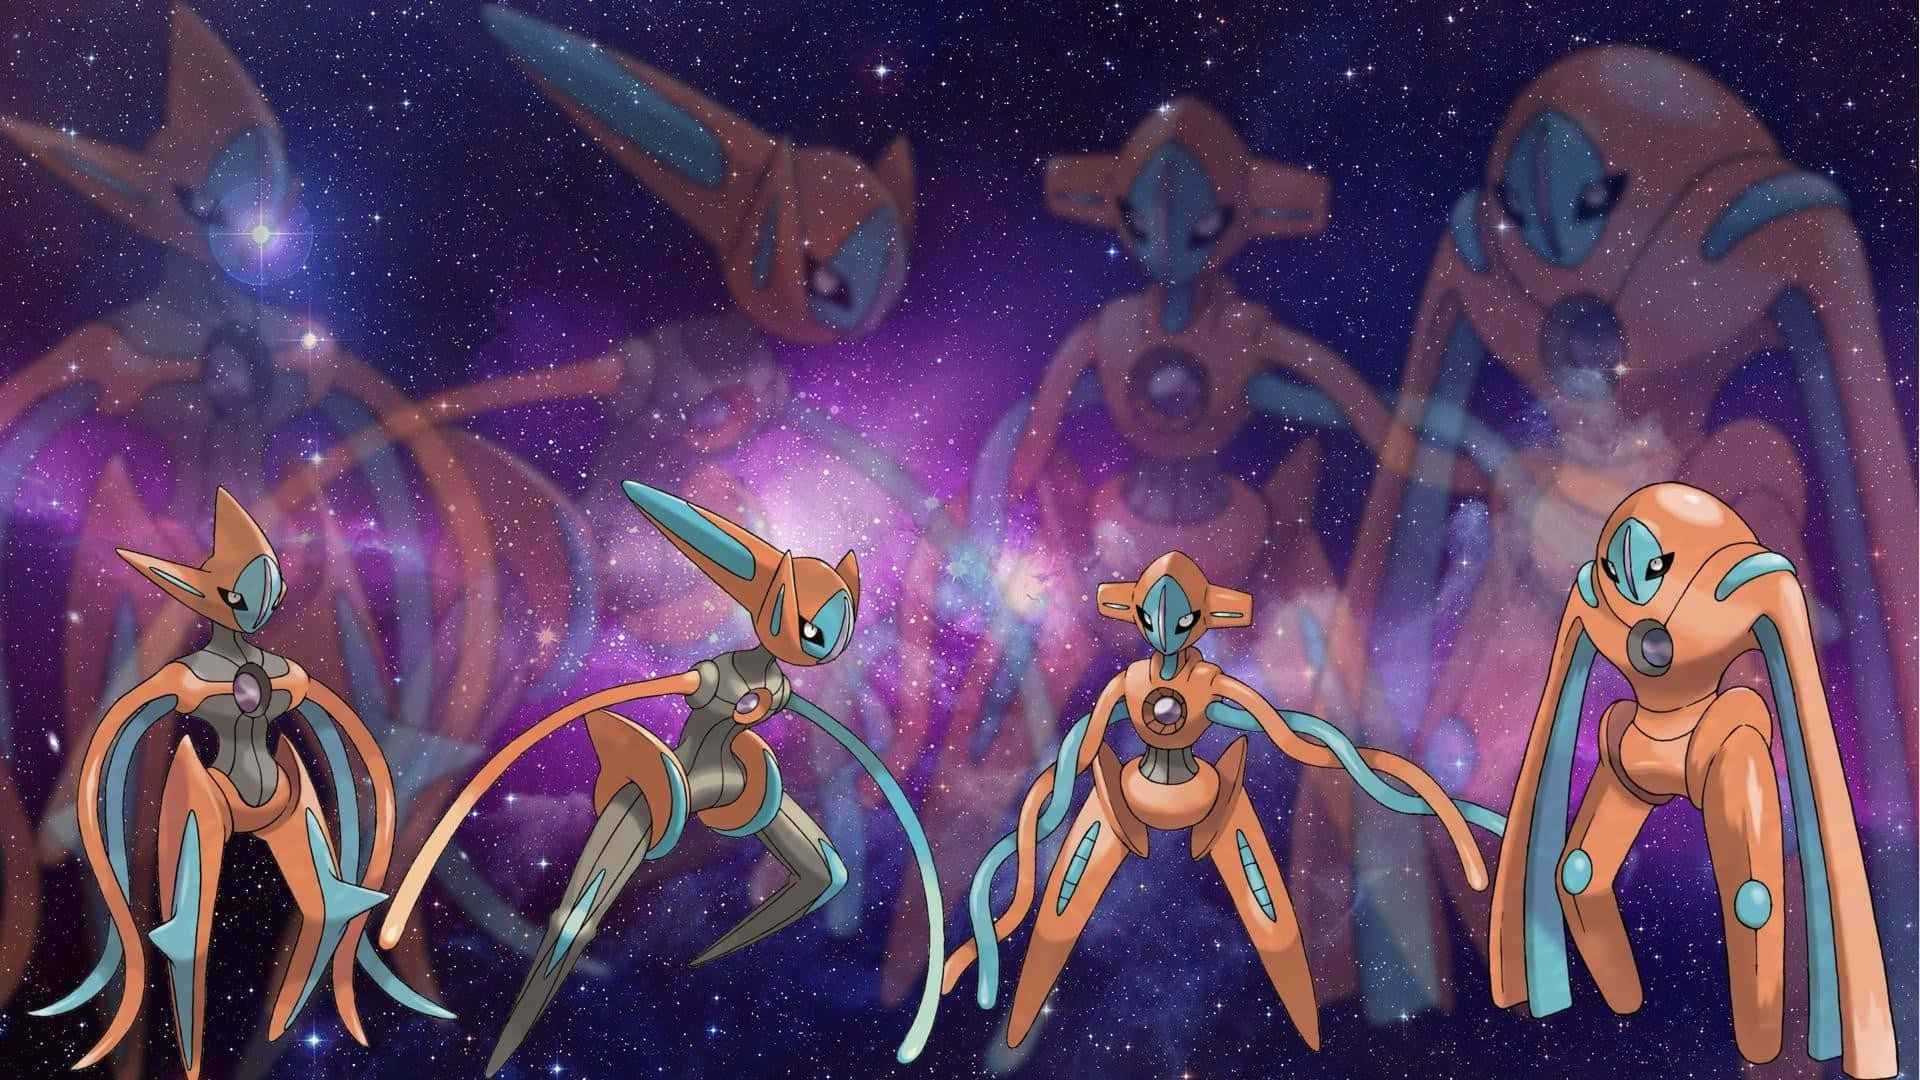 Imagendel Legendario Pokémon Deoxys